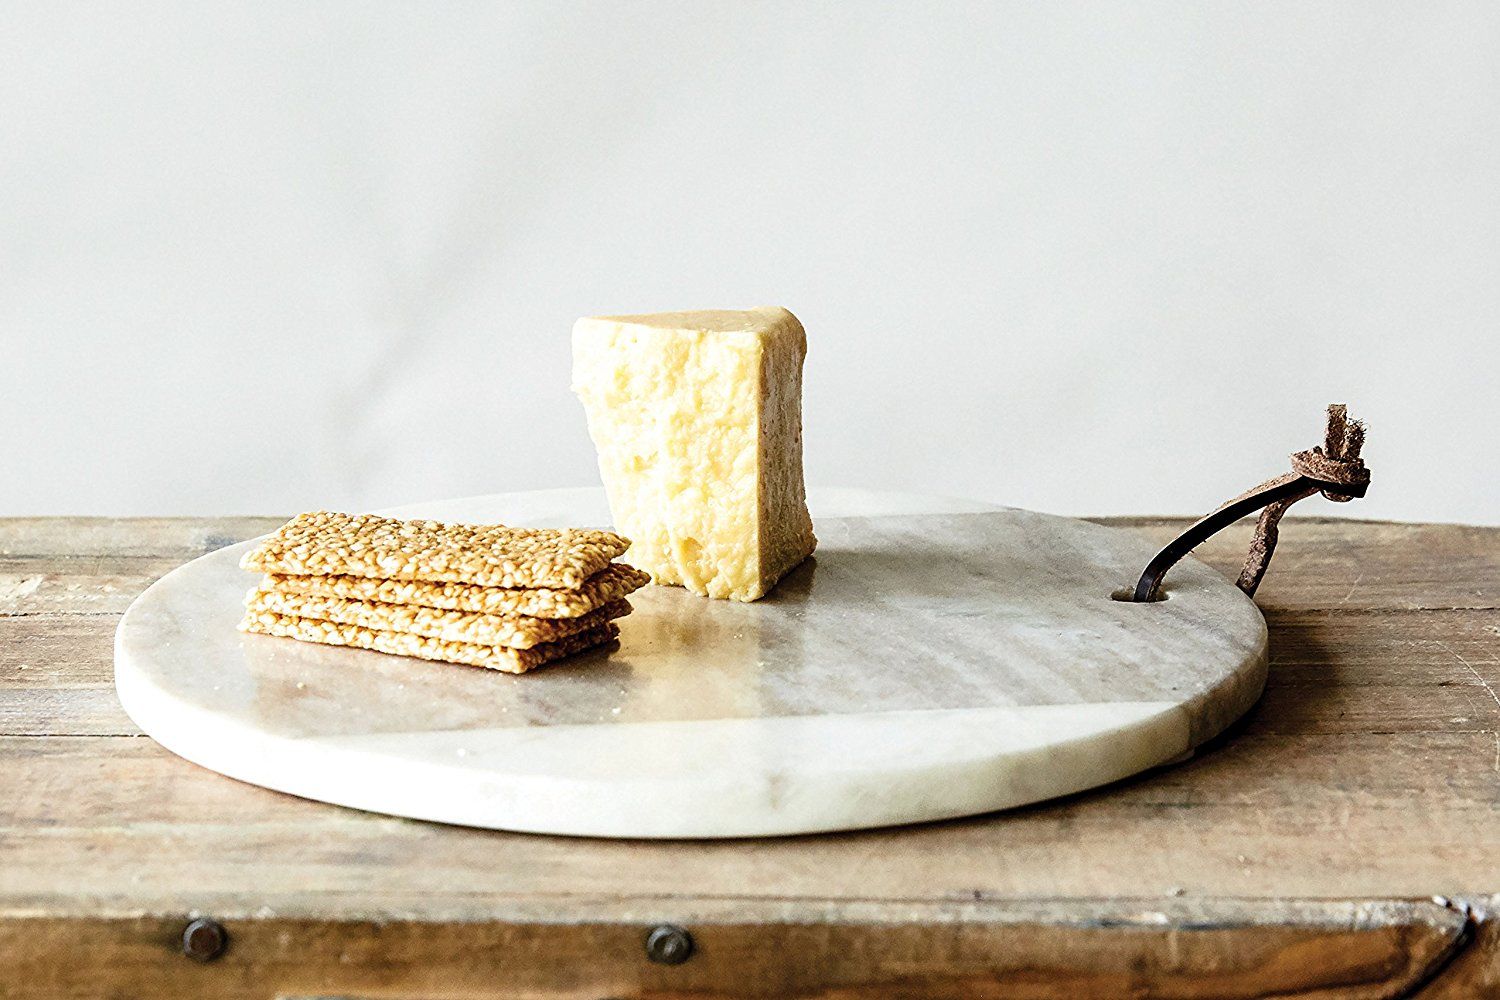 Creative Co-Op Round White Marble Cheese Board Tray Kitchen Serveware | Walmart (US)